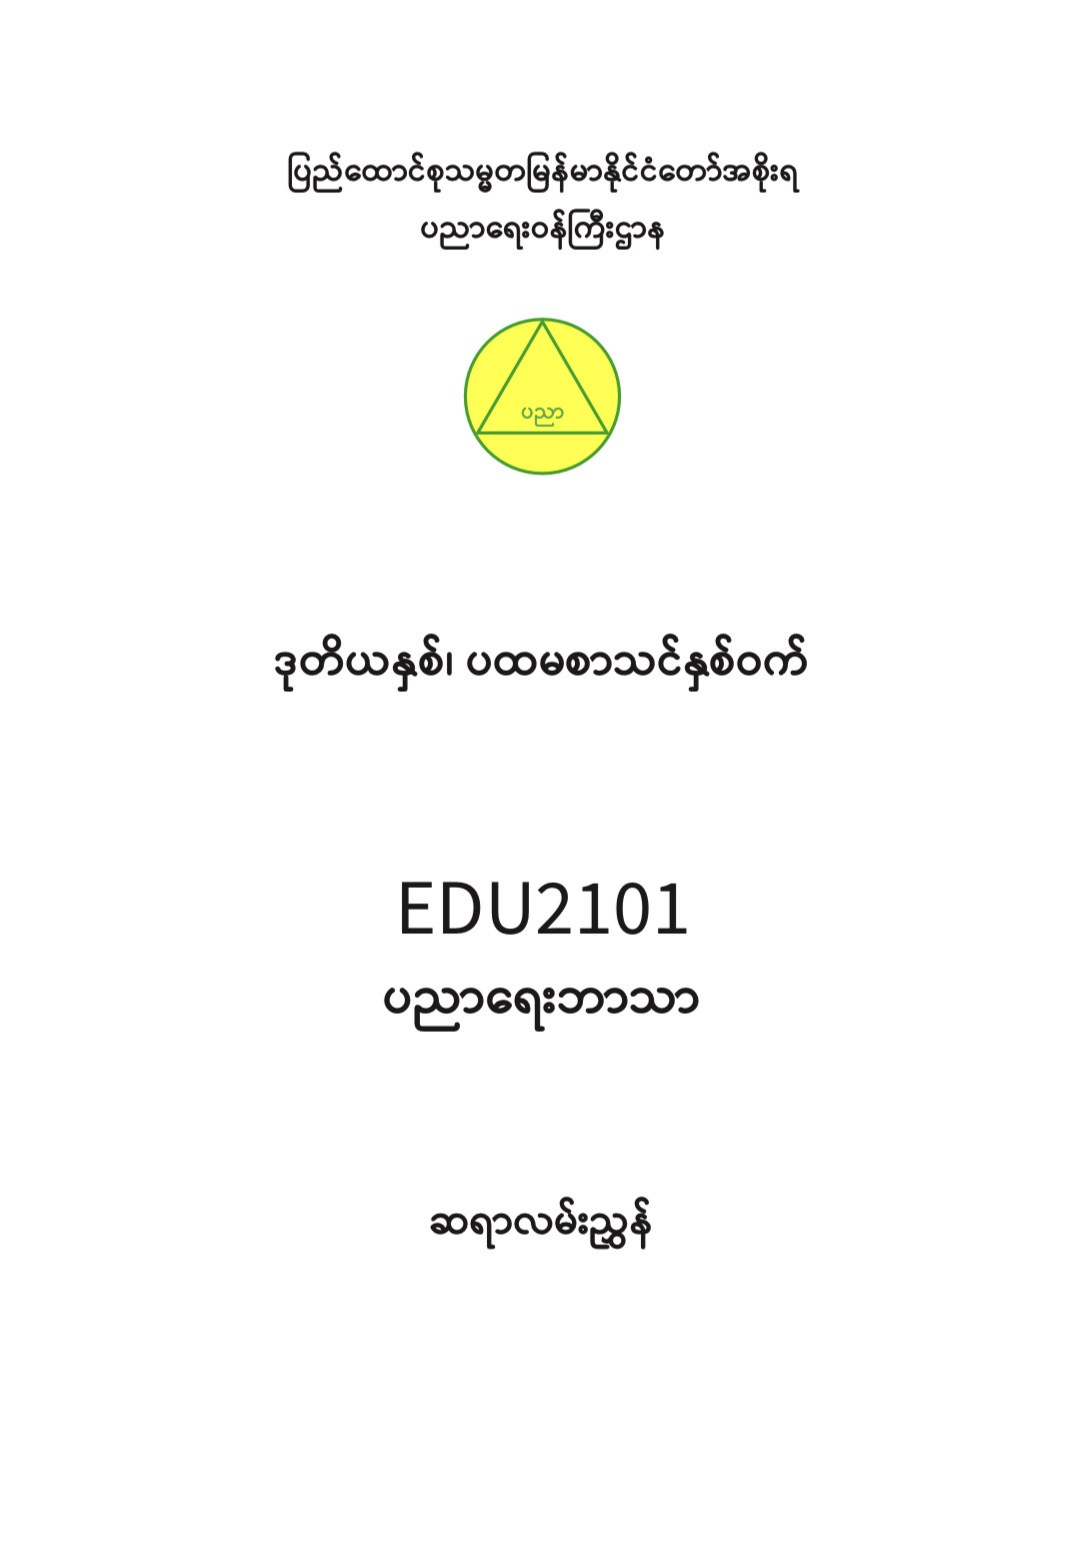 EDC Year 2 Semester 1 Educational Studies Teacher Educator Guide (Myanmar version)